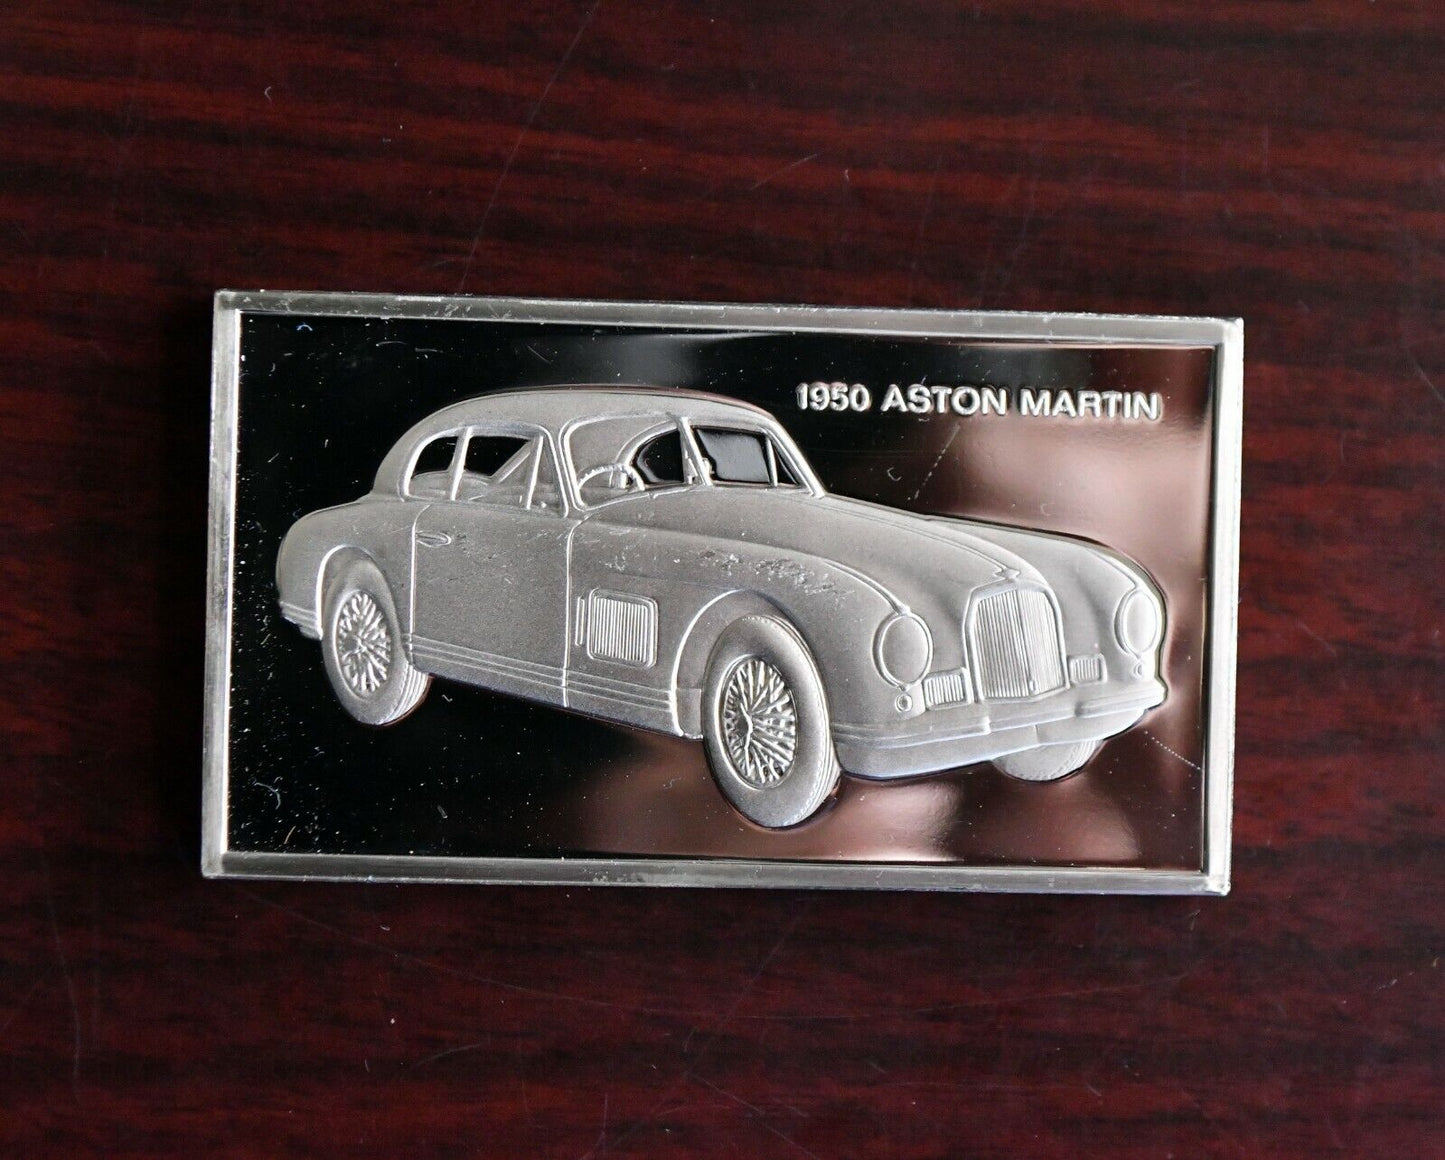 1950 Aston Martin Centennial Car Collection 1000 Grain Sterling Franklin Mint